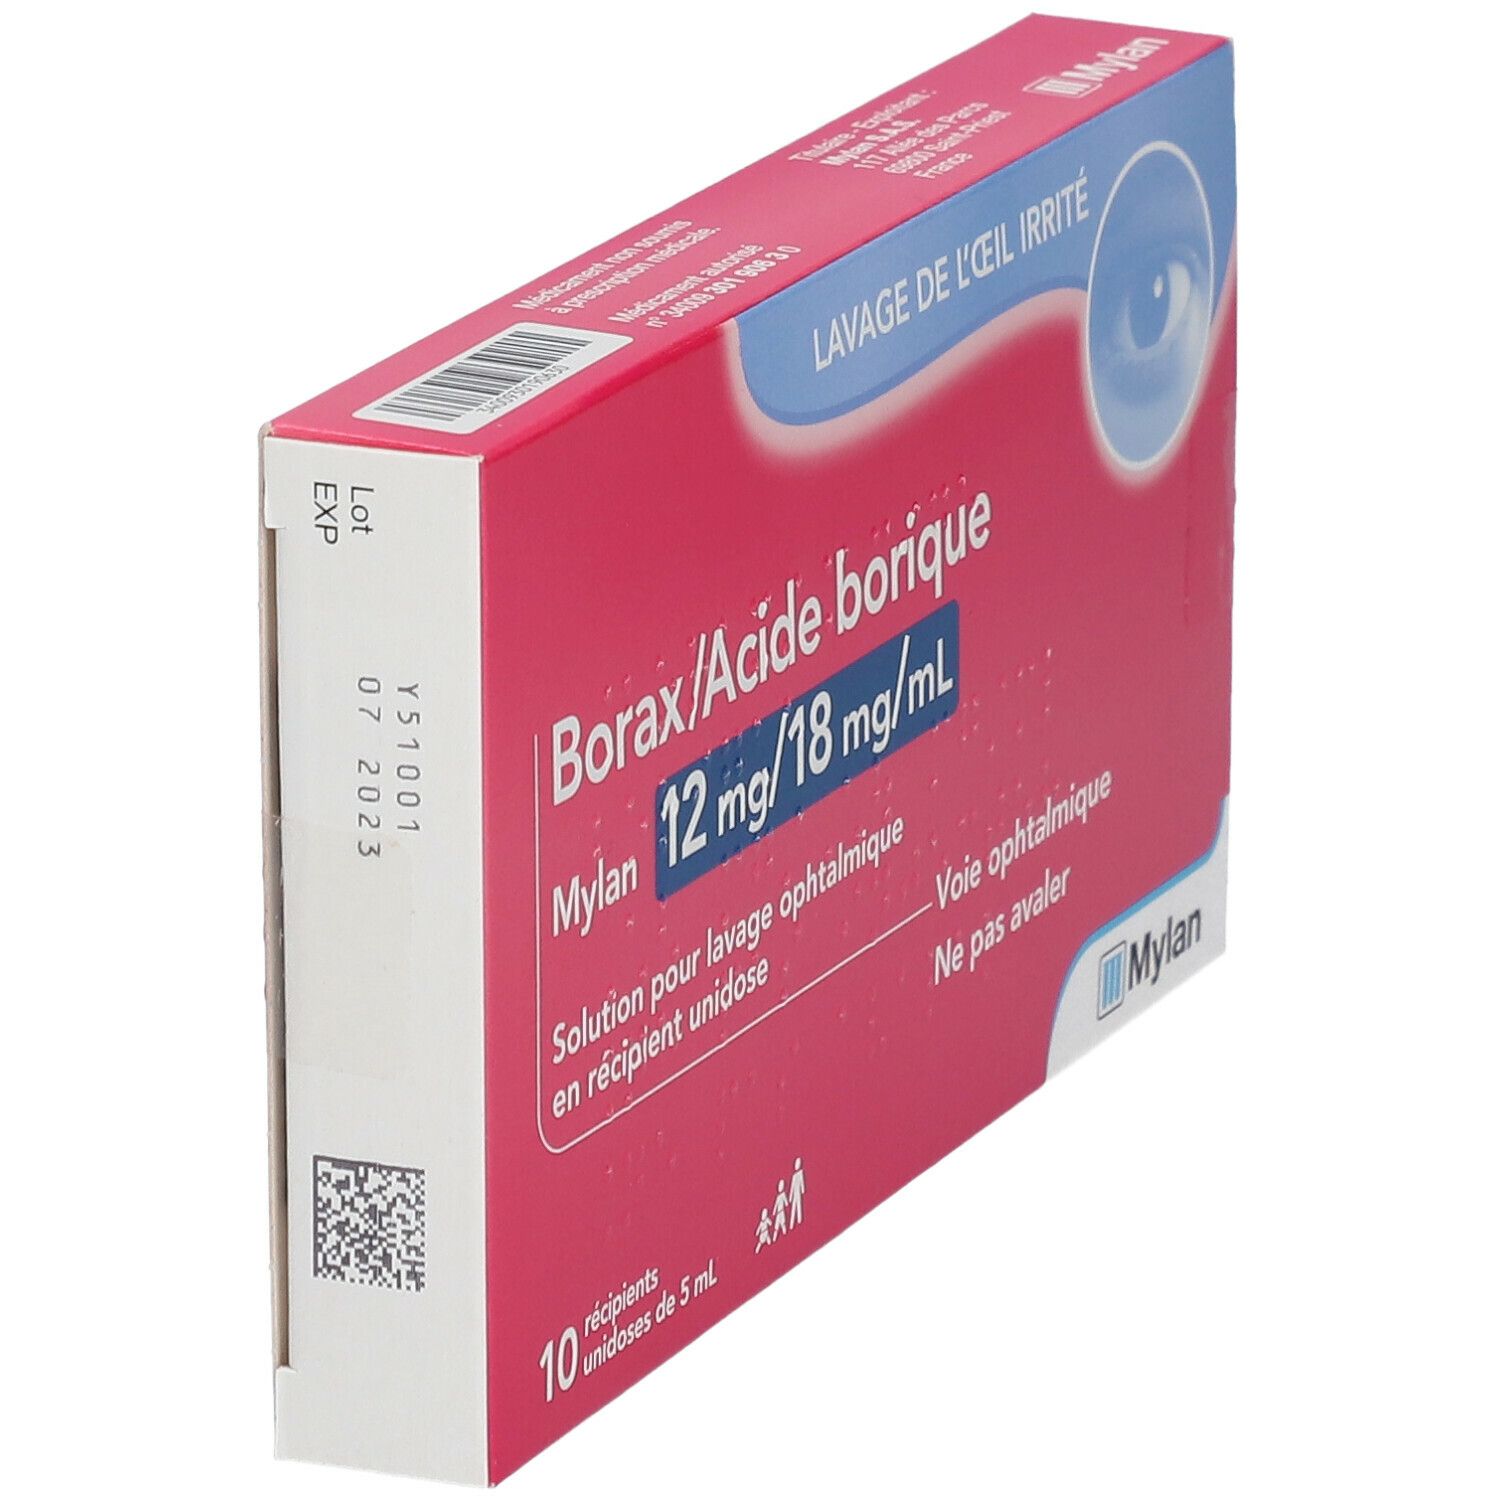 Borax/Acide borique Viatris 12mg/18mg/ml Mylan 50 ml - Redcare Pharmacie